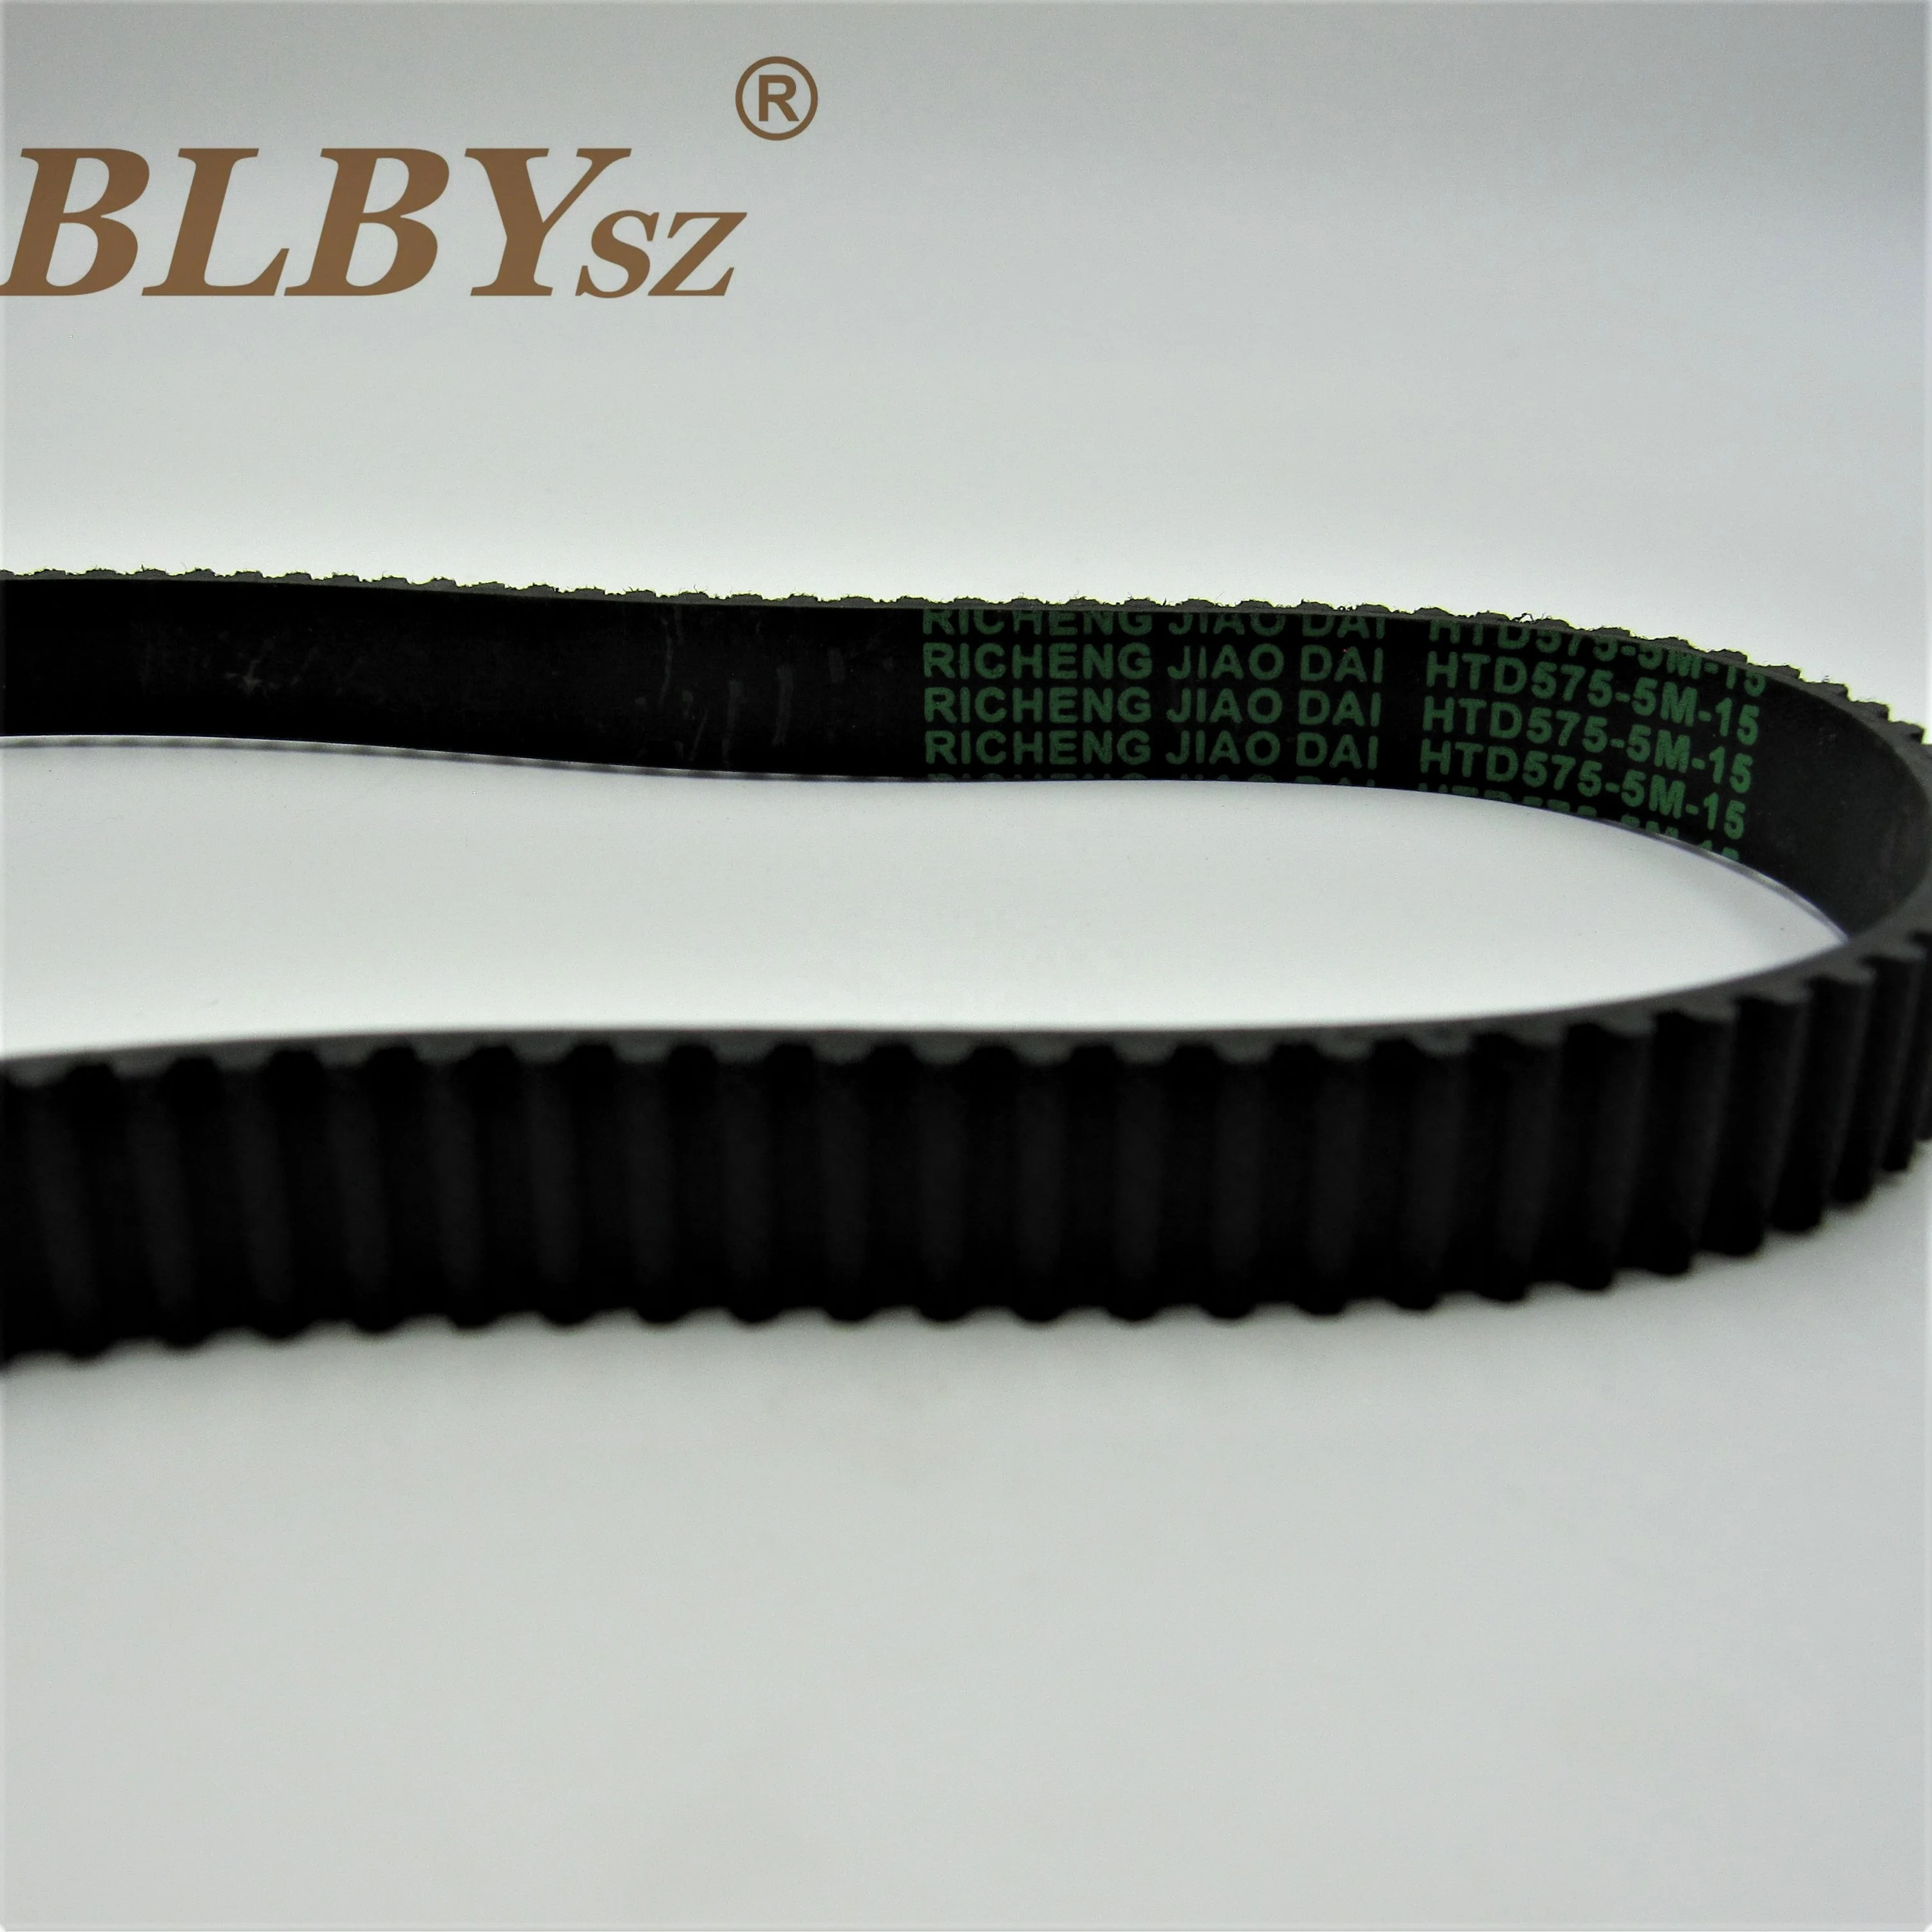 High Quality Blbysz -5m-15 Timing Belt For Sewing Machine - Buy .